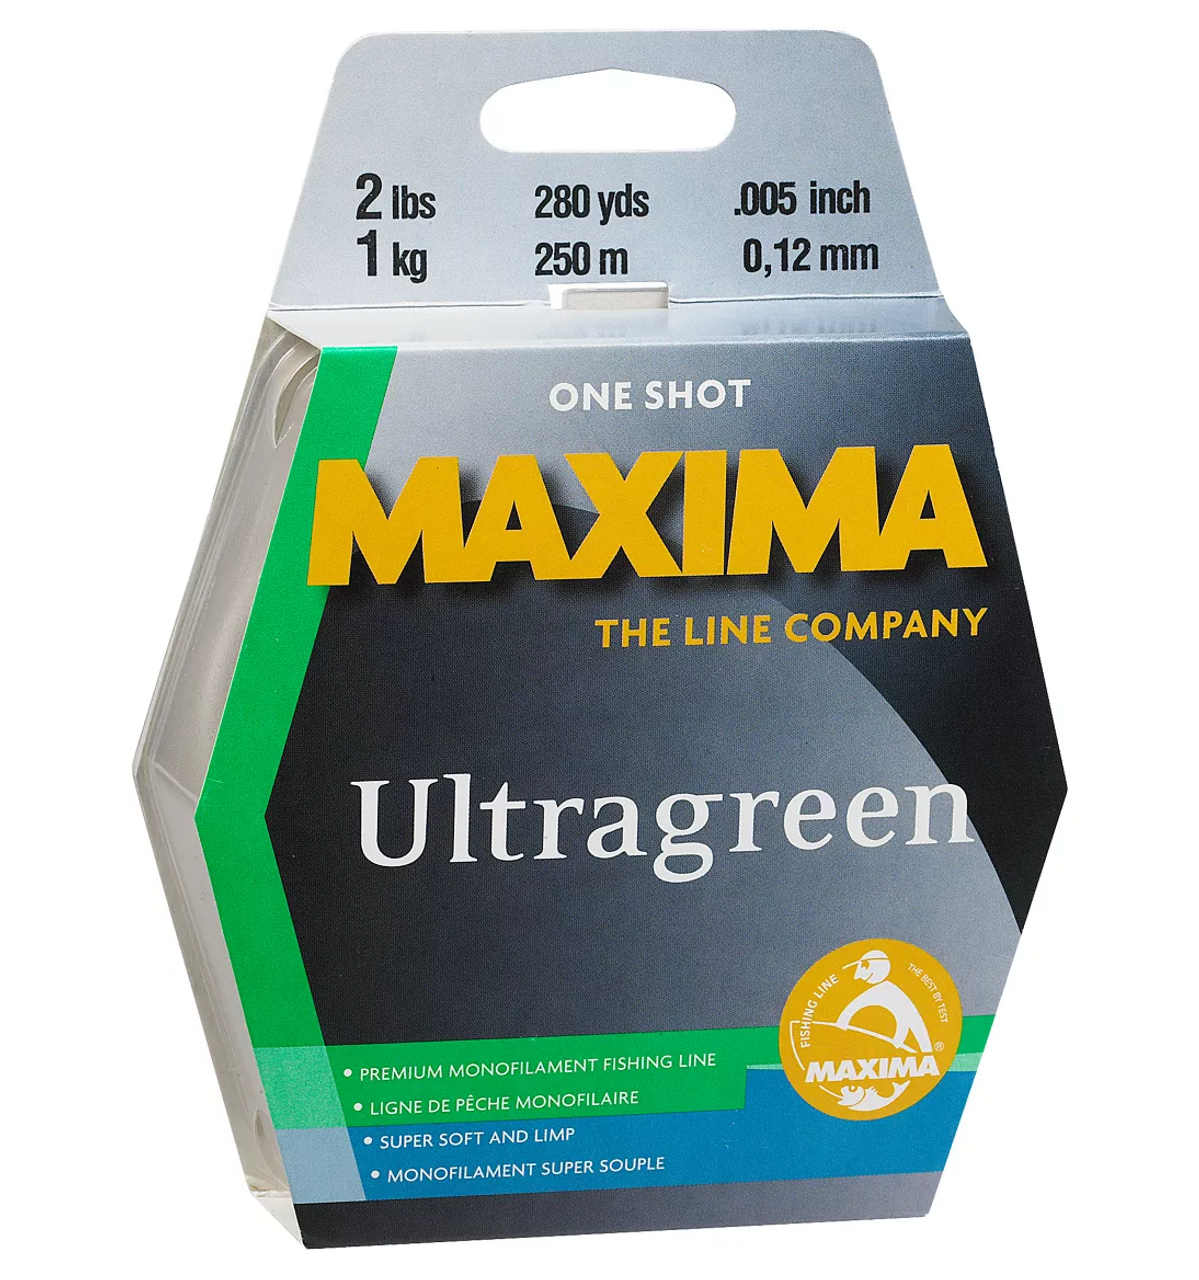 Maxima Ultragreen One Shot spools